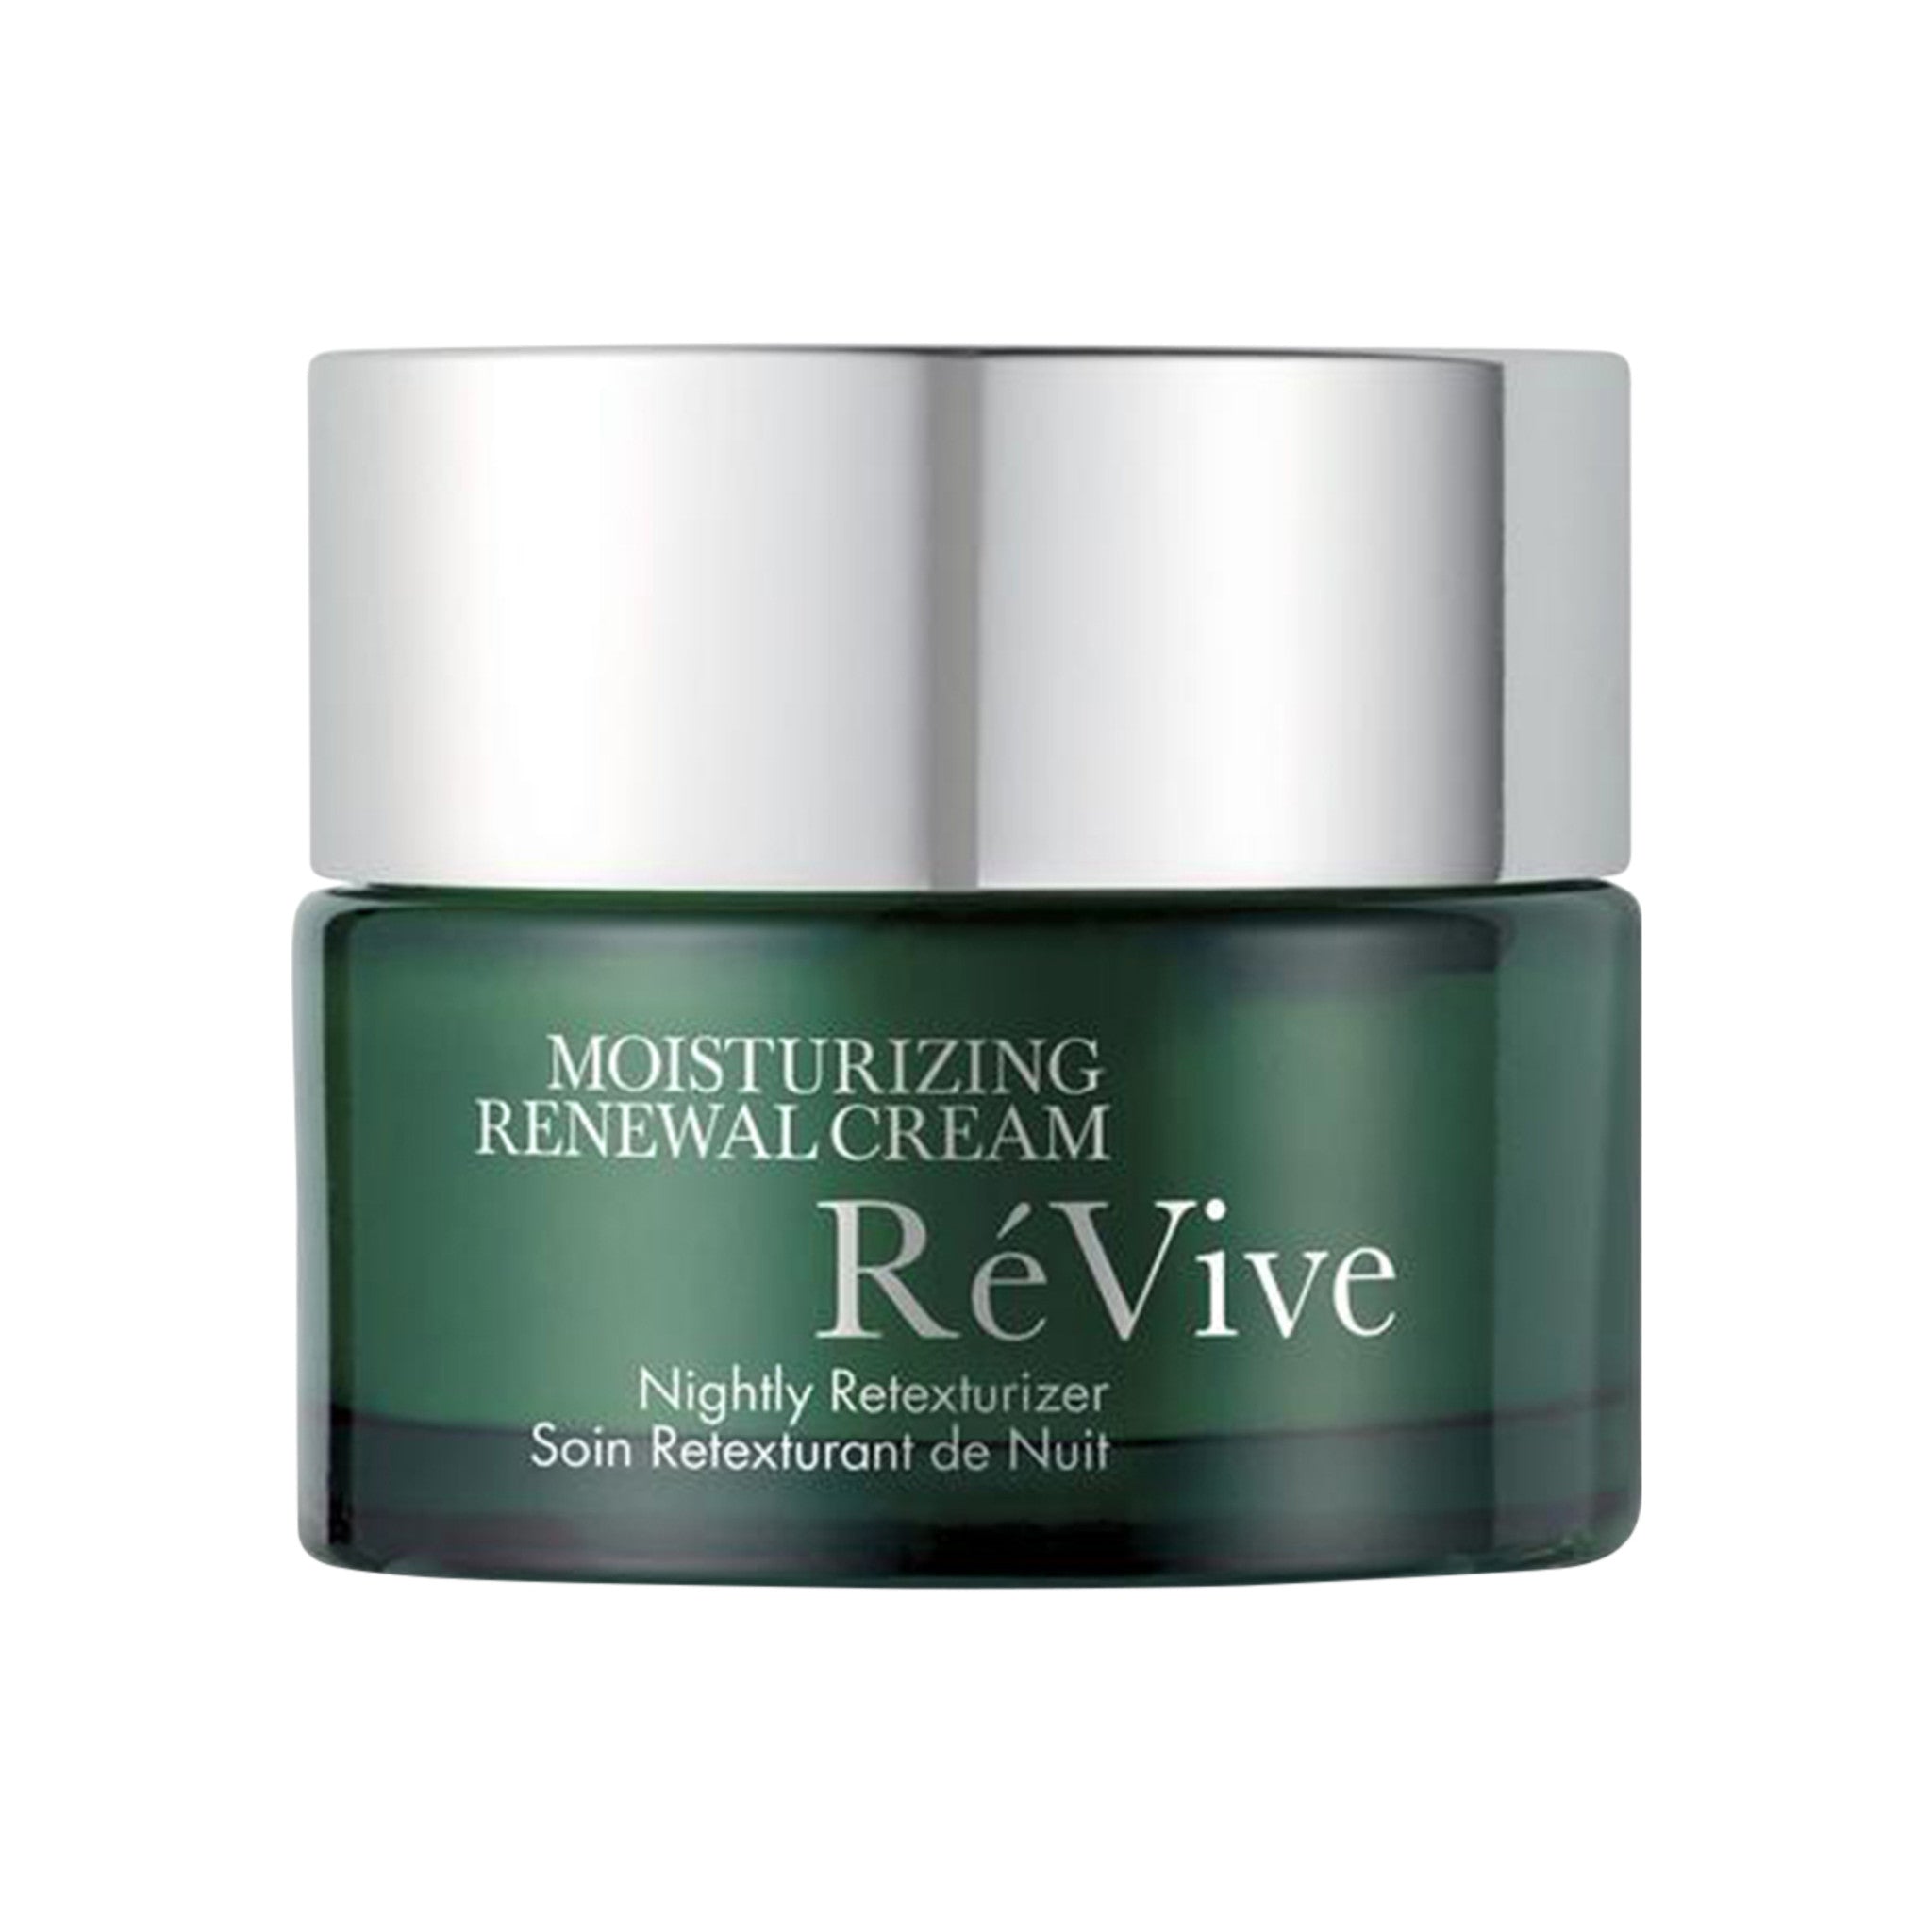 RéVive Moisturizing Renewal Cream Nightly Retexturizer main image.